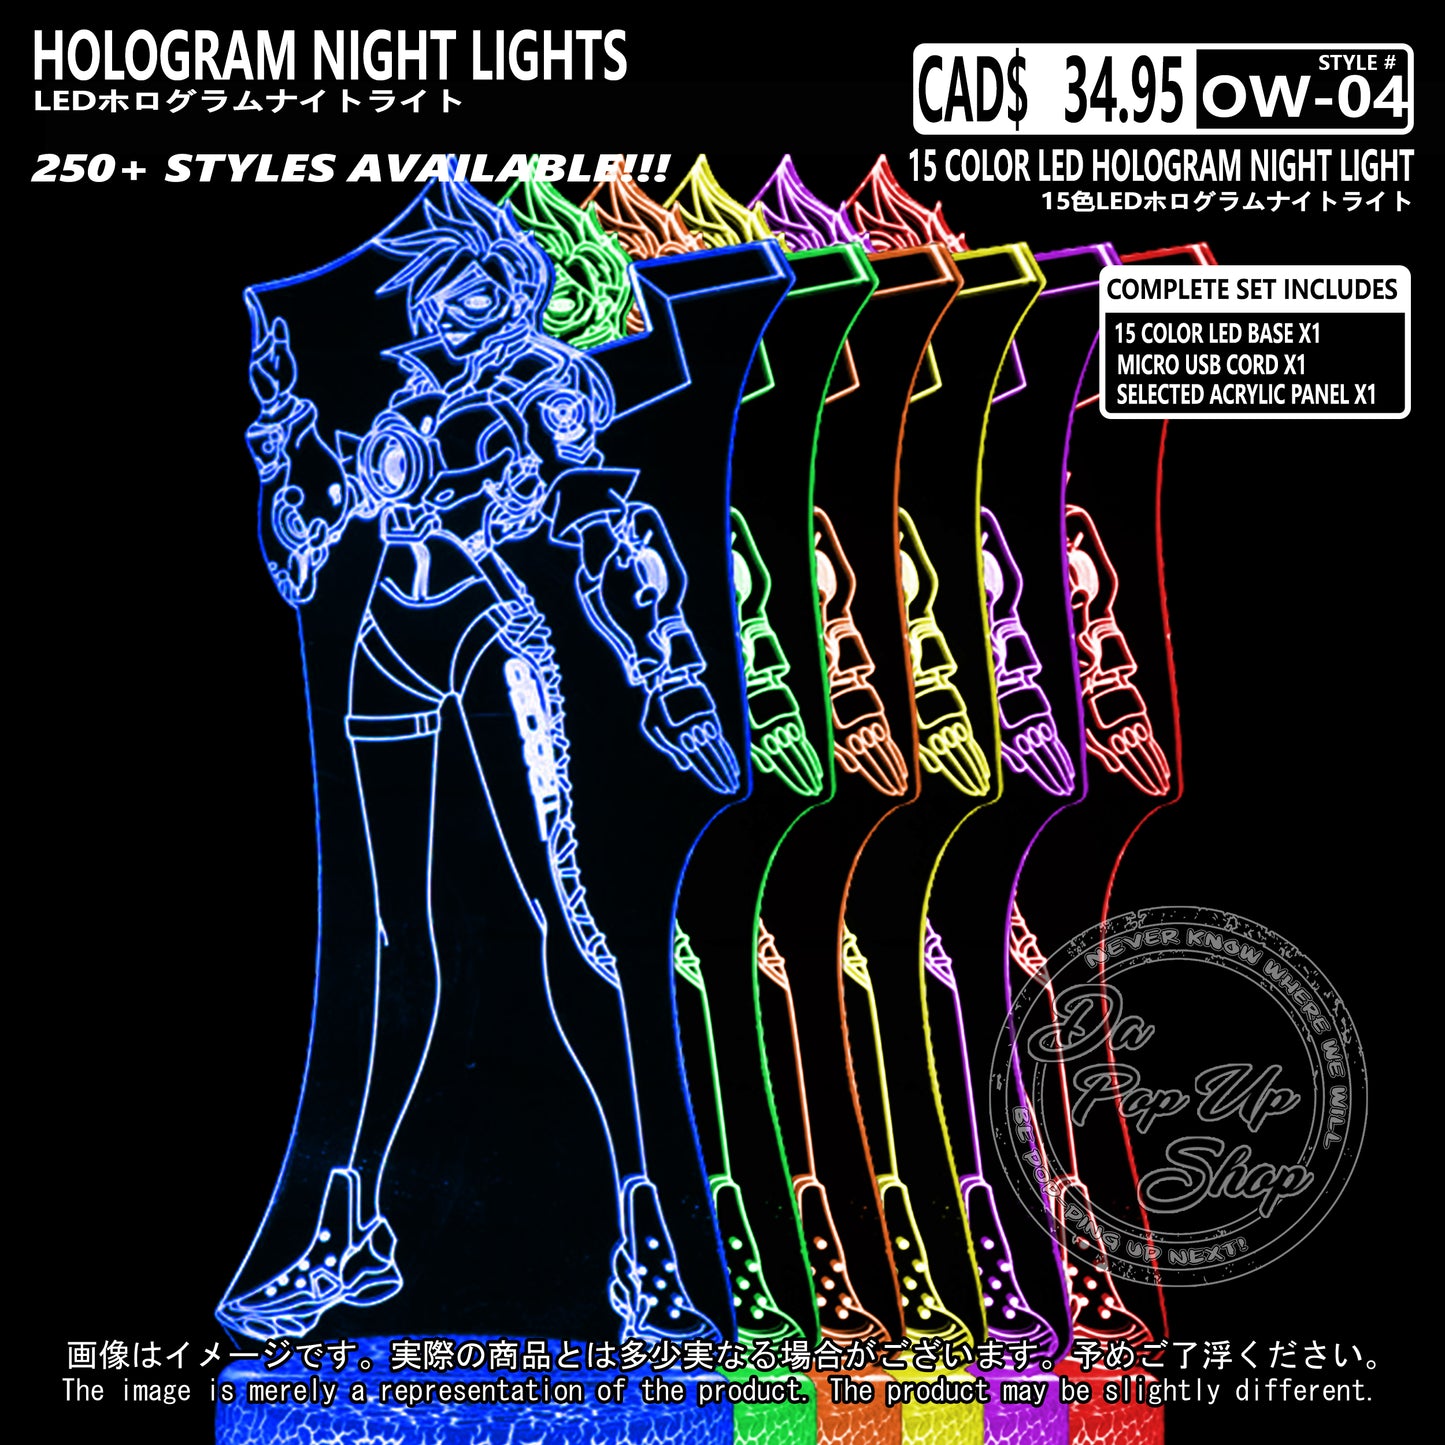 (OW-04) TRACER Overwatch Hologram LED Night Light